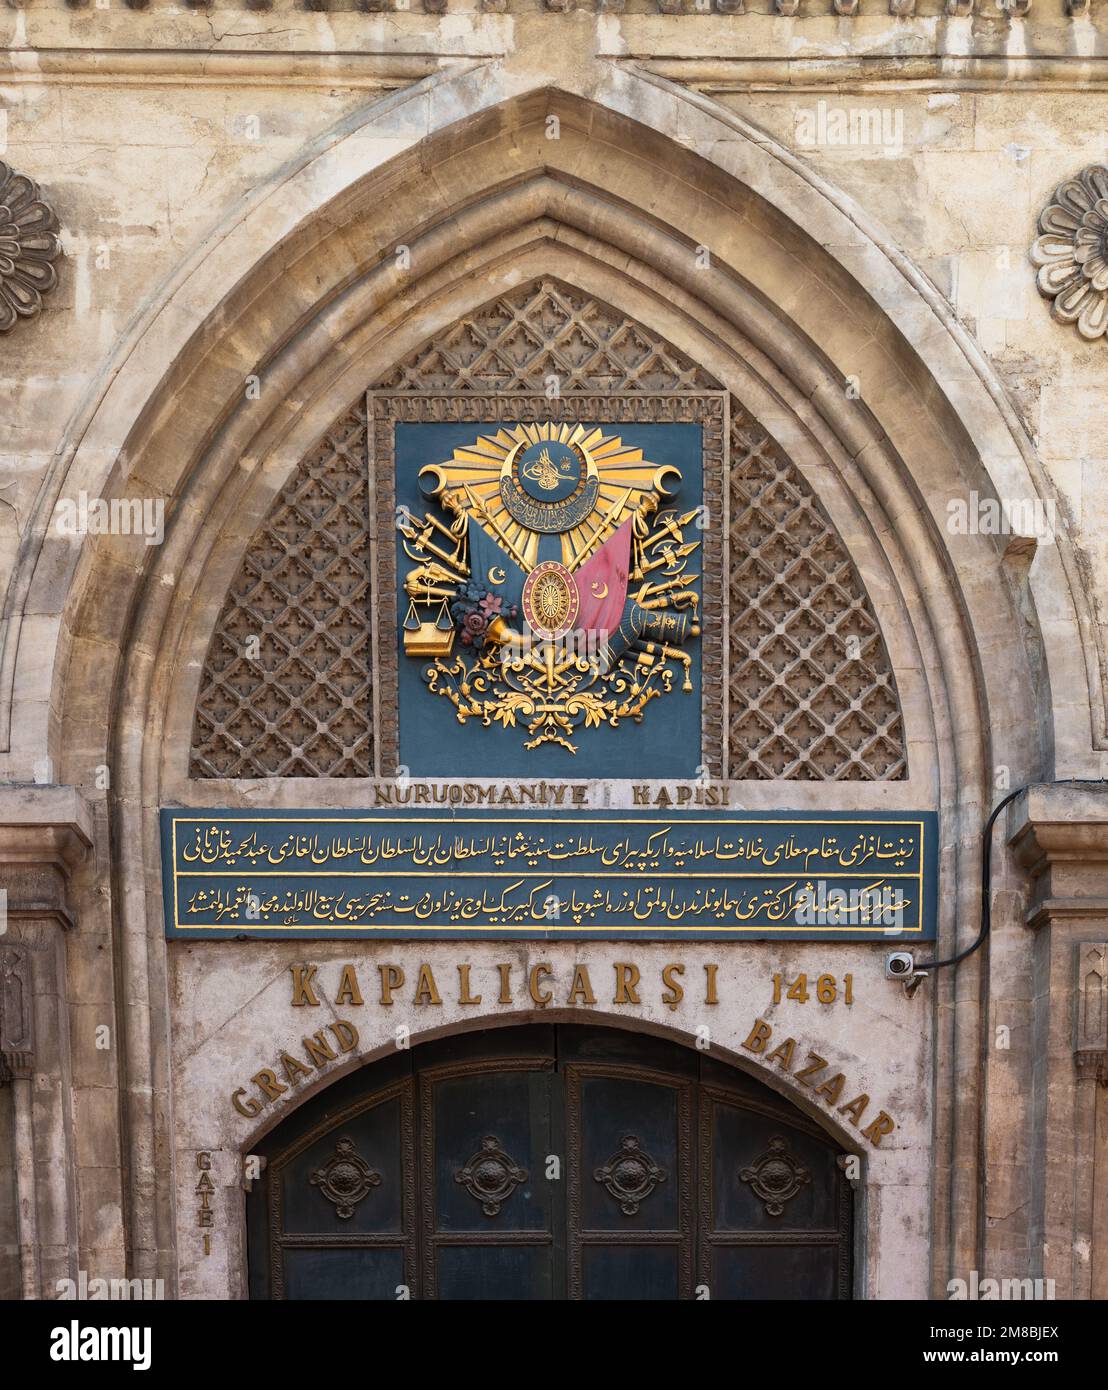 Nuruosmaniye gate 1 entrance to the Grand Bazaar, Istanbul, Turkey Stock Photo